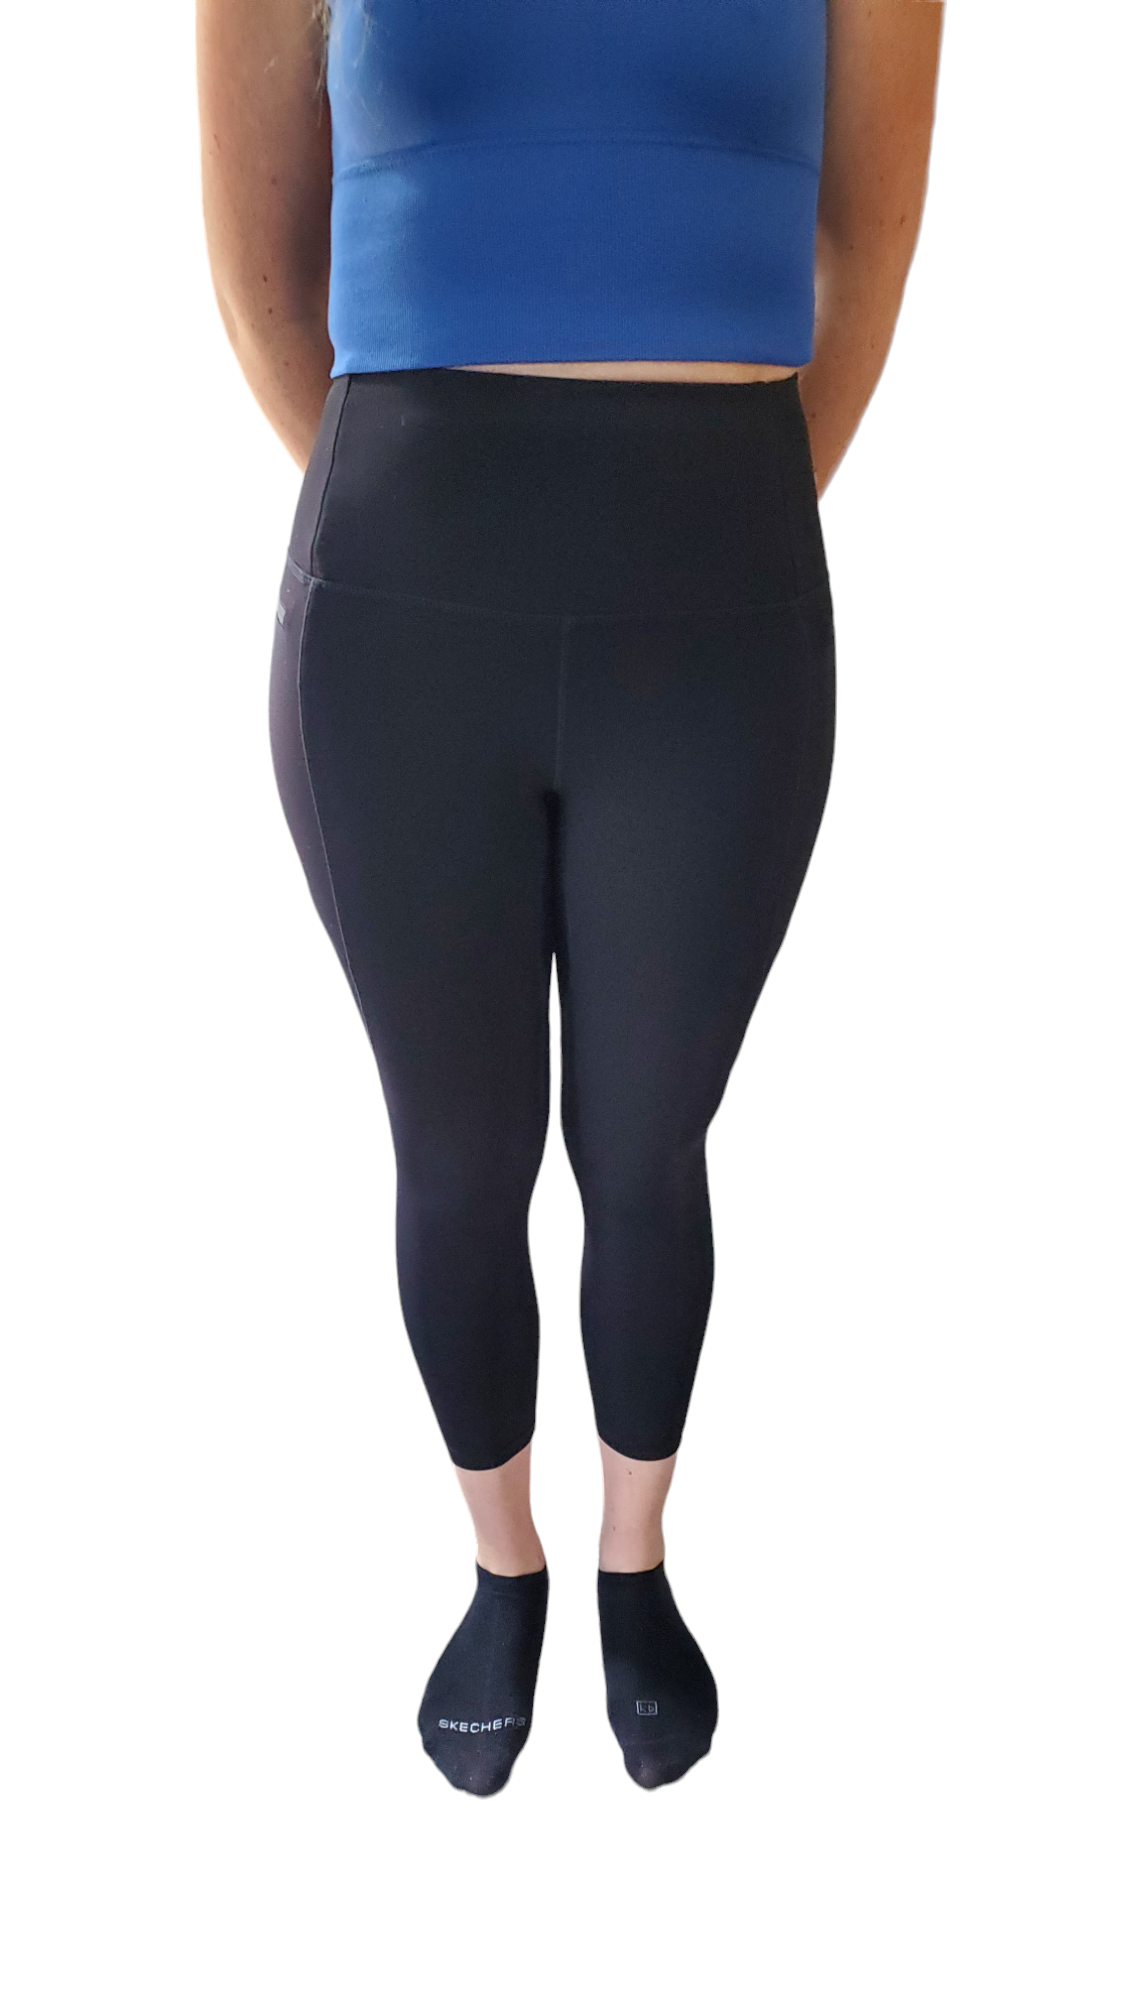 Flare Leggings for Women Tummy Control Leggings Female Bootcut Yoga Pants  with Pocket Butt Lift High Waist Bootleg Pants Size s – LANBAOSI